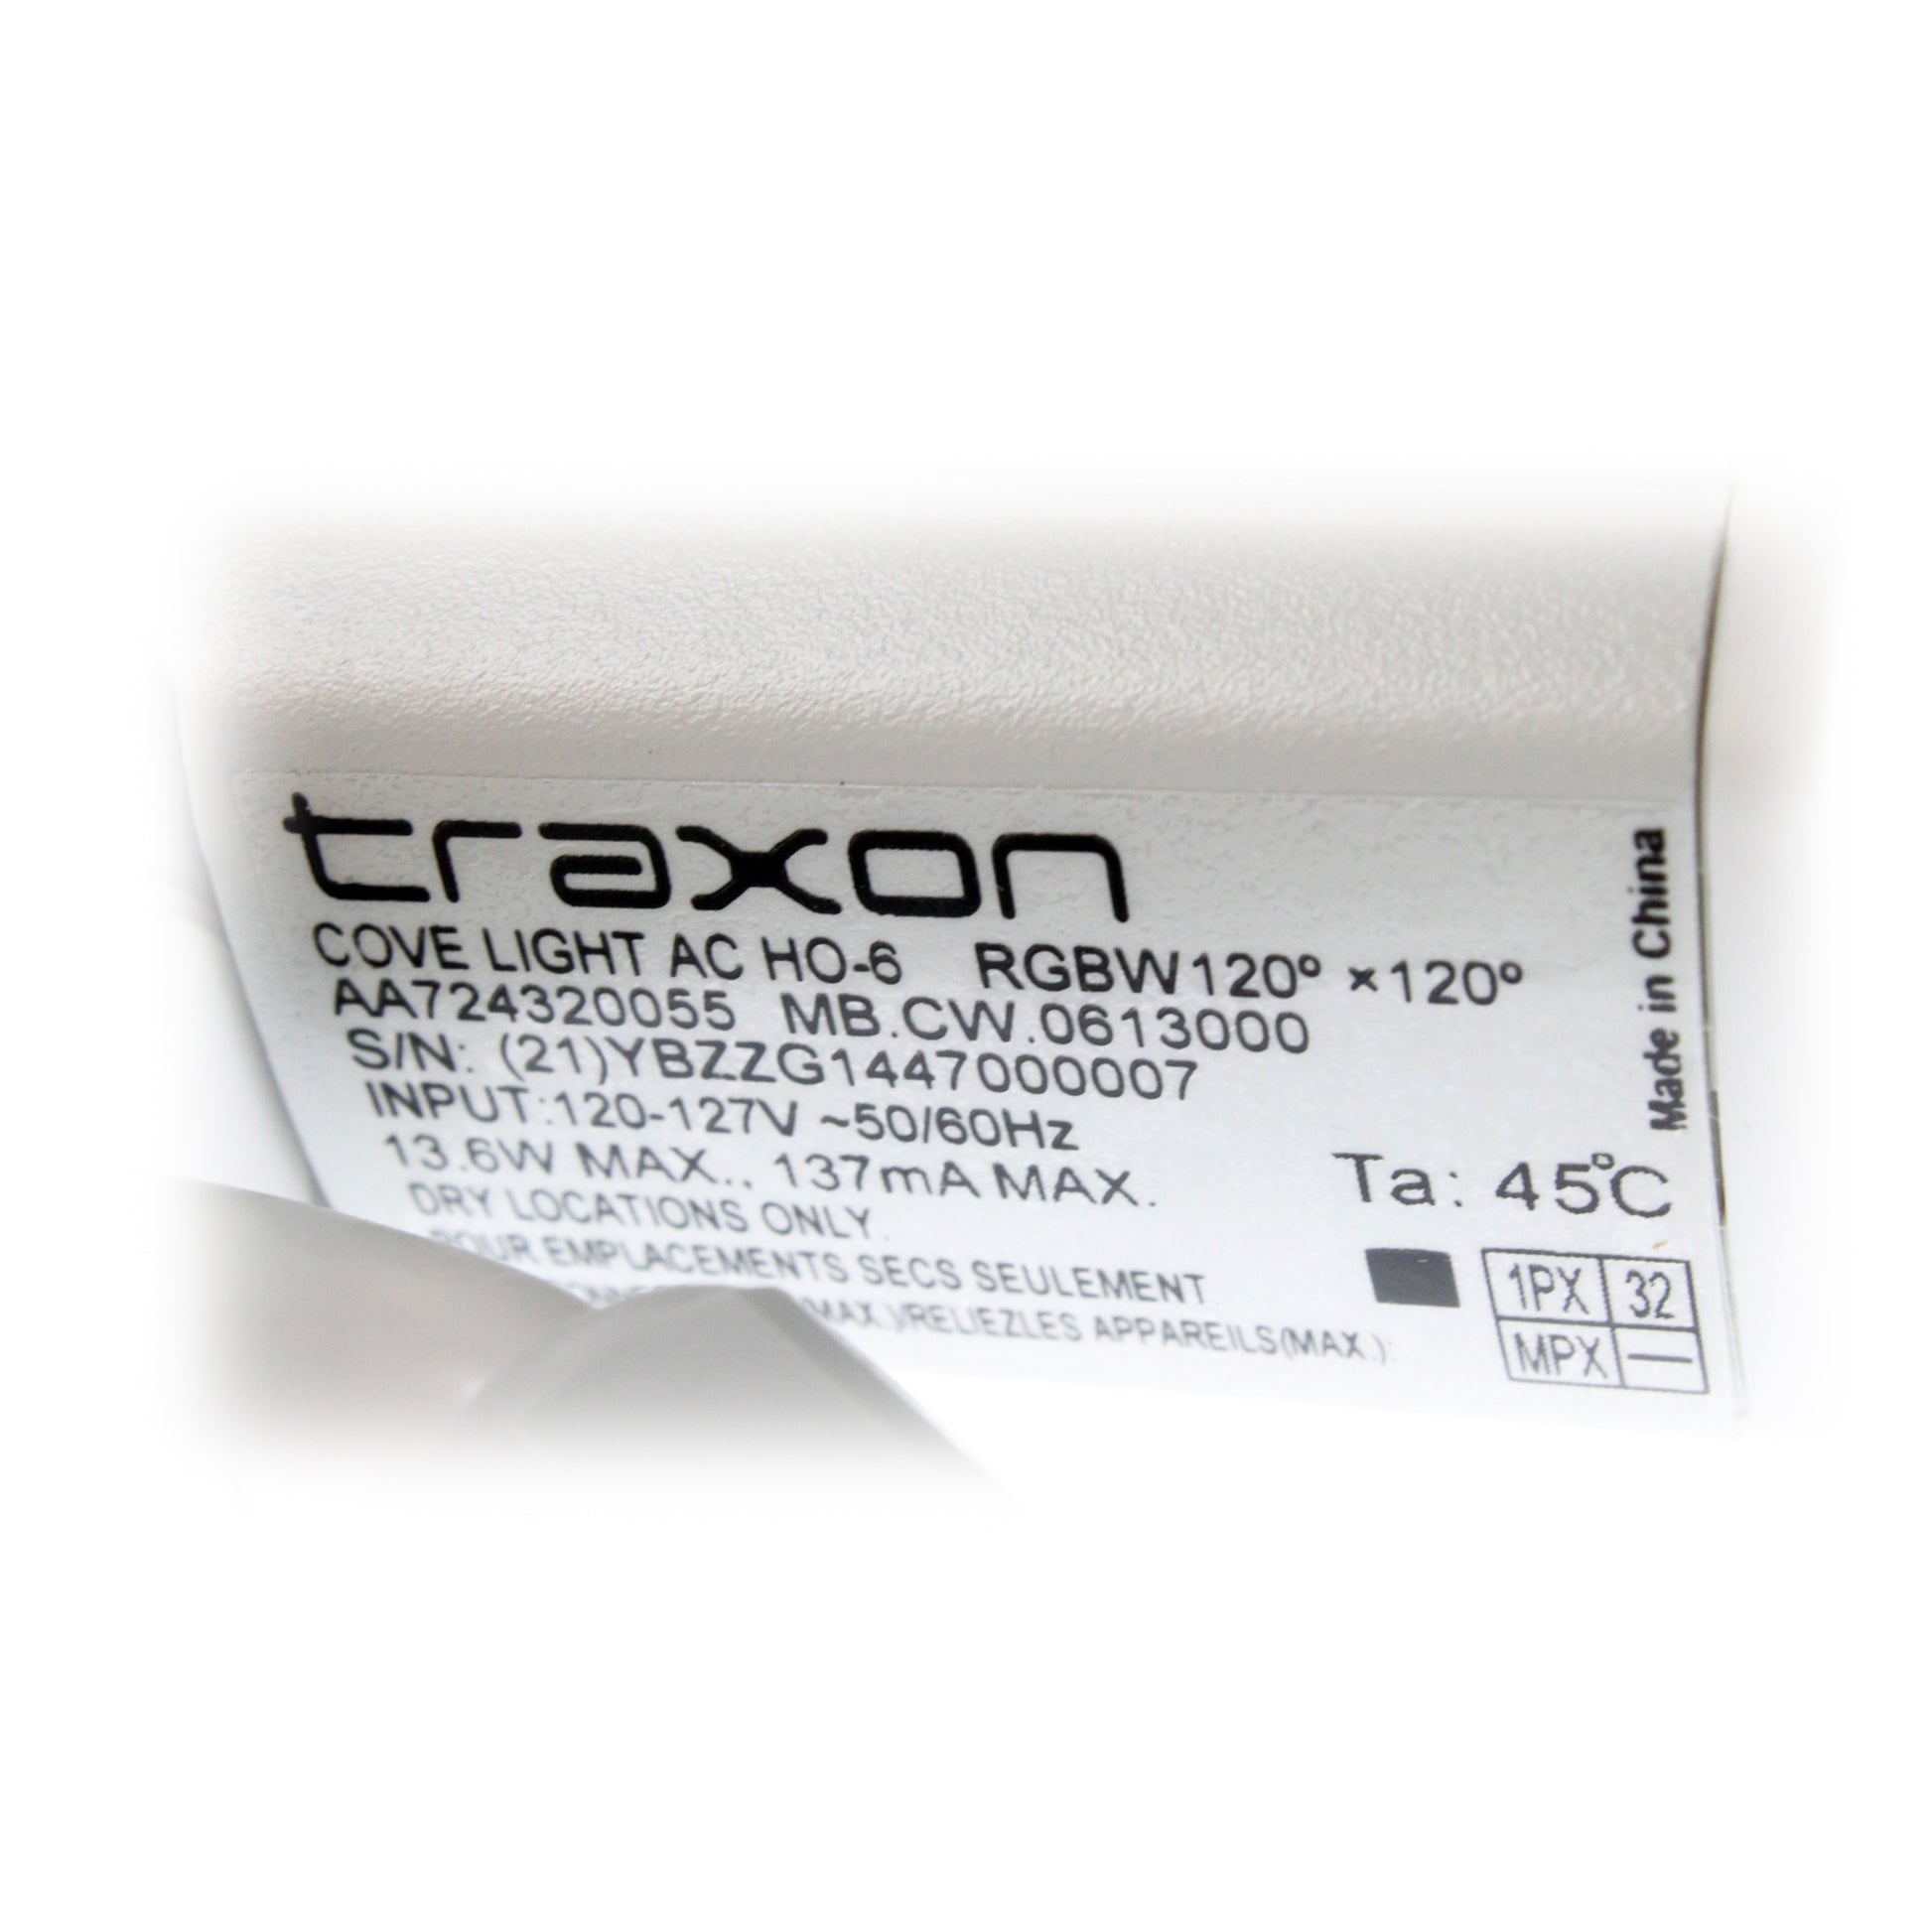 Traxon MB.CW.0613000